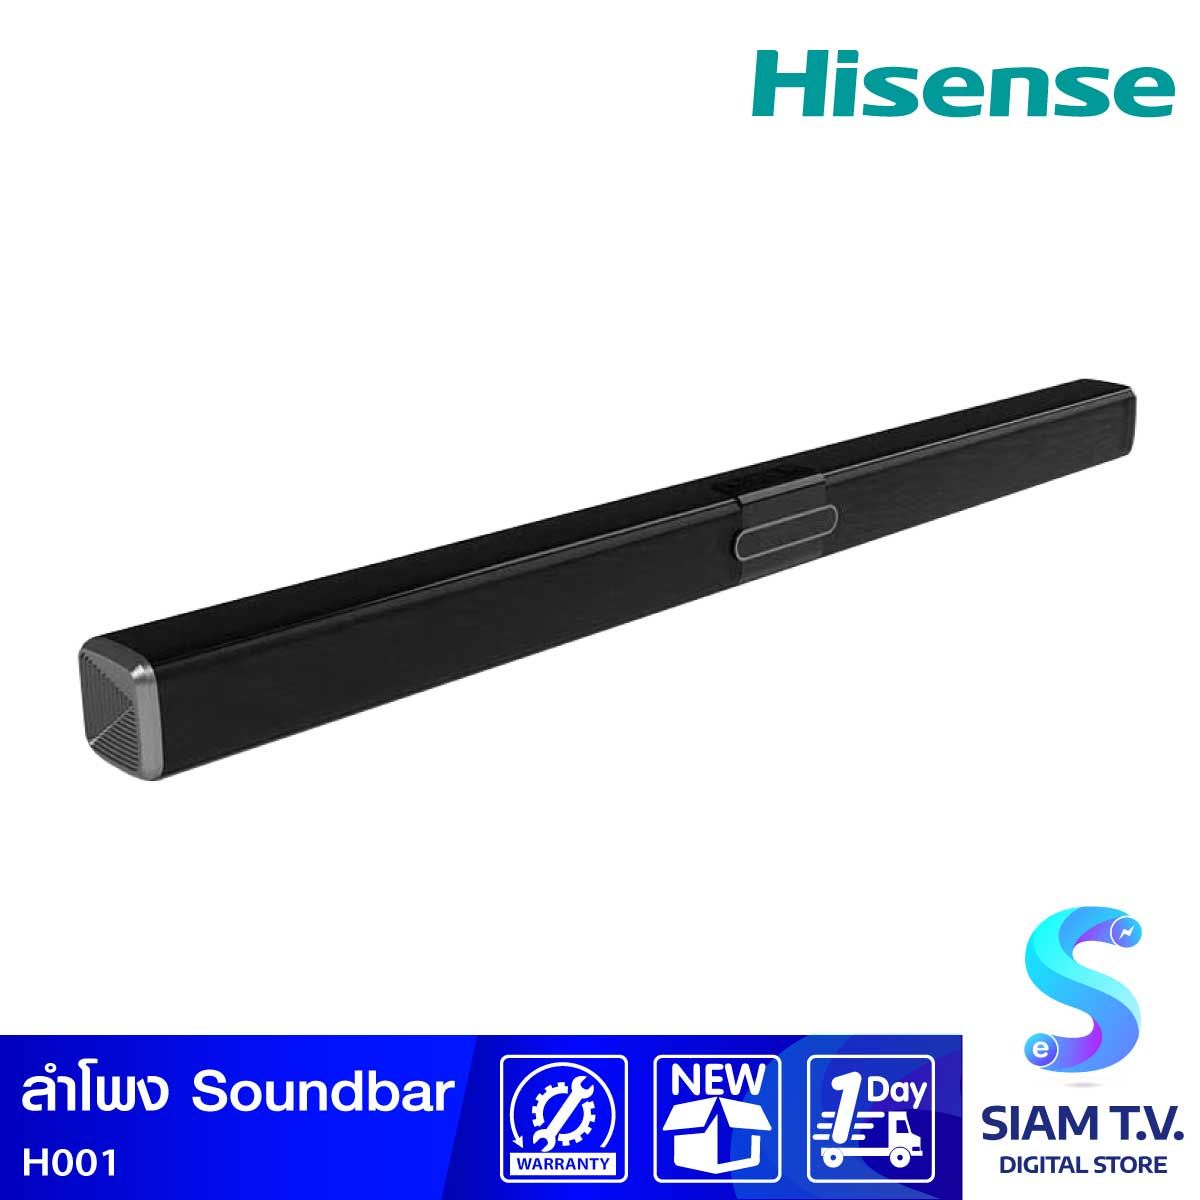 Hisense Soundbar โฮมเธียเตอร์ รุ่น H001 ชุดเครื่องเสียงซาวด์บาร์